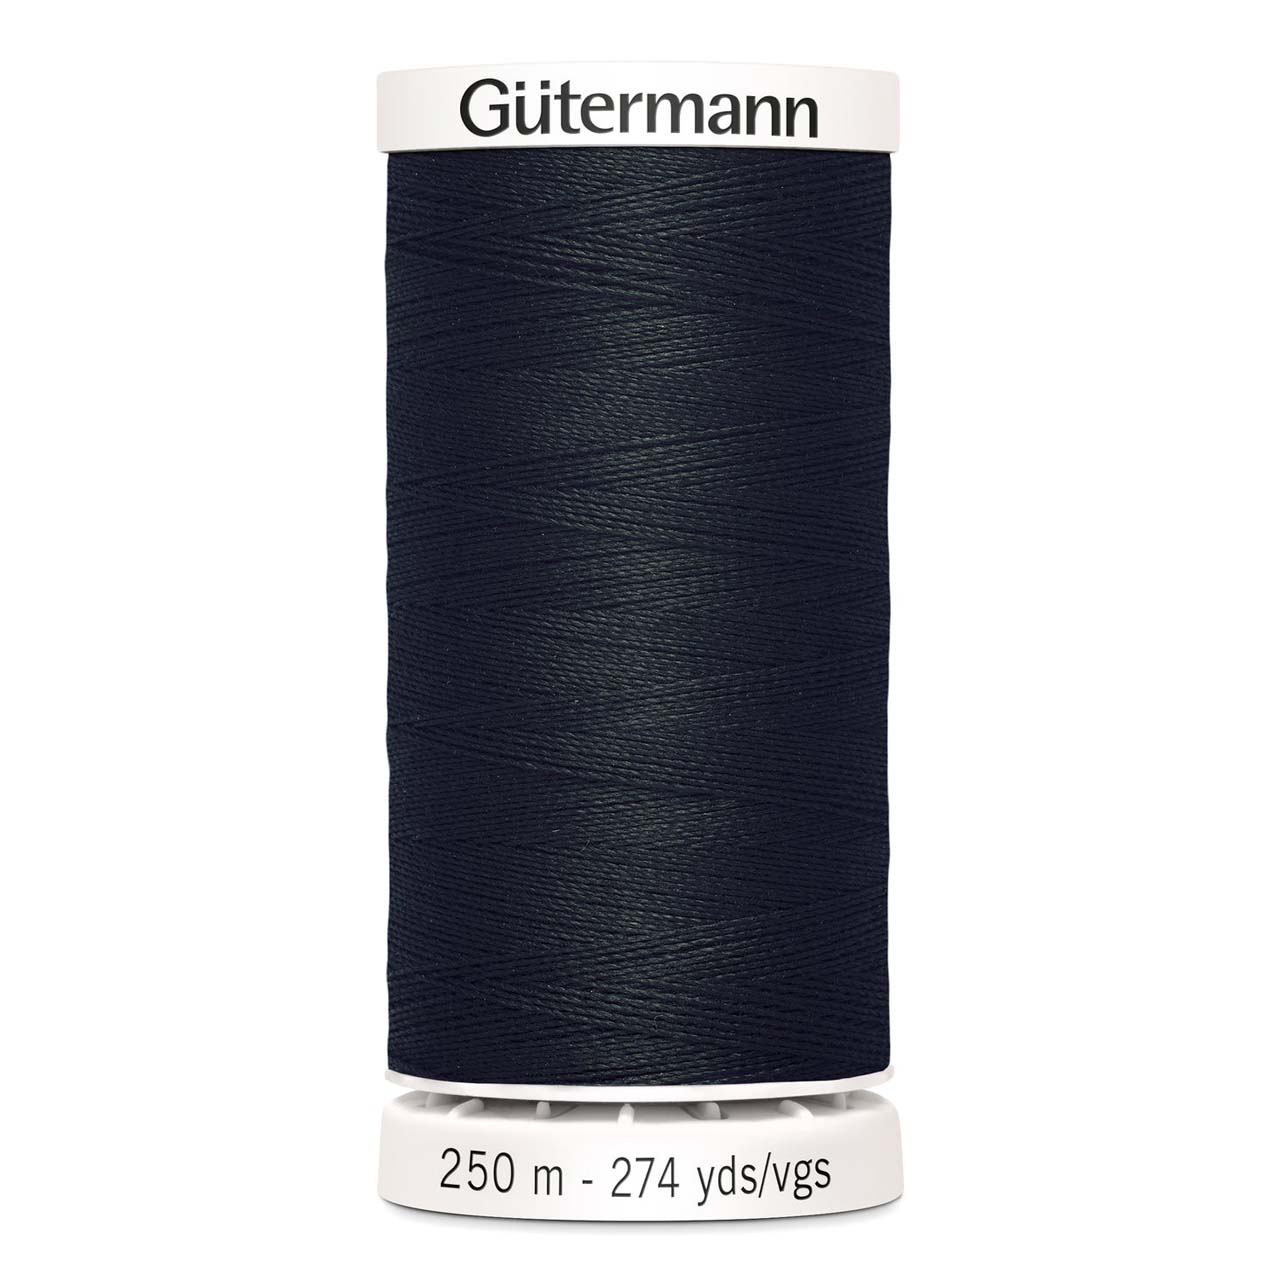 gutermann thread 000 black sewing thread 250 metres